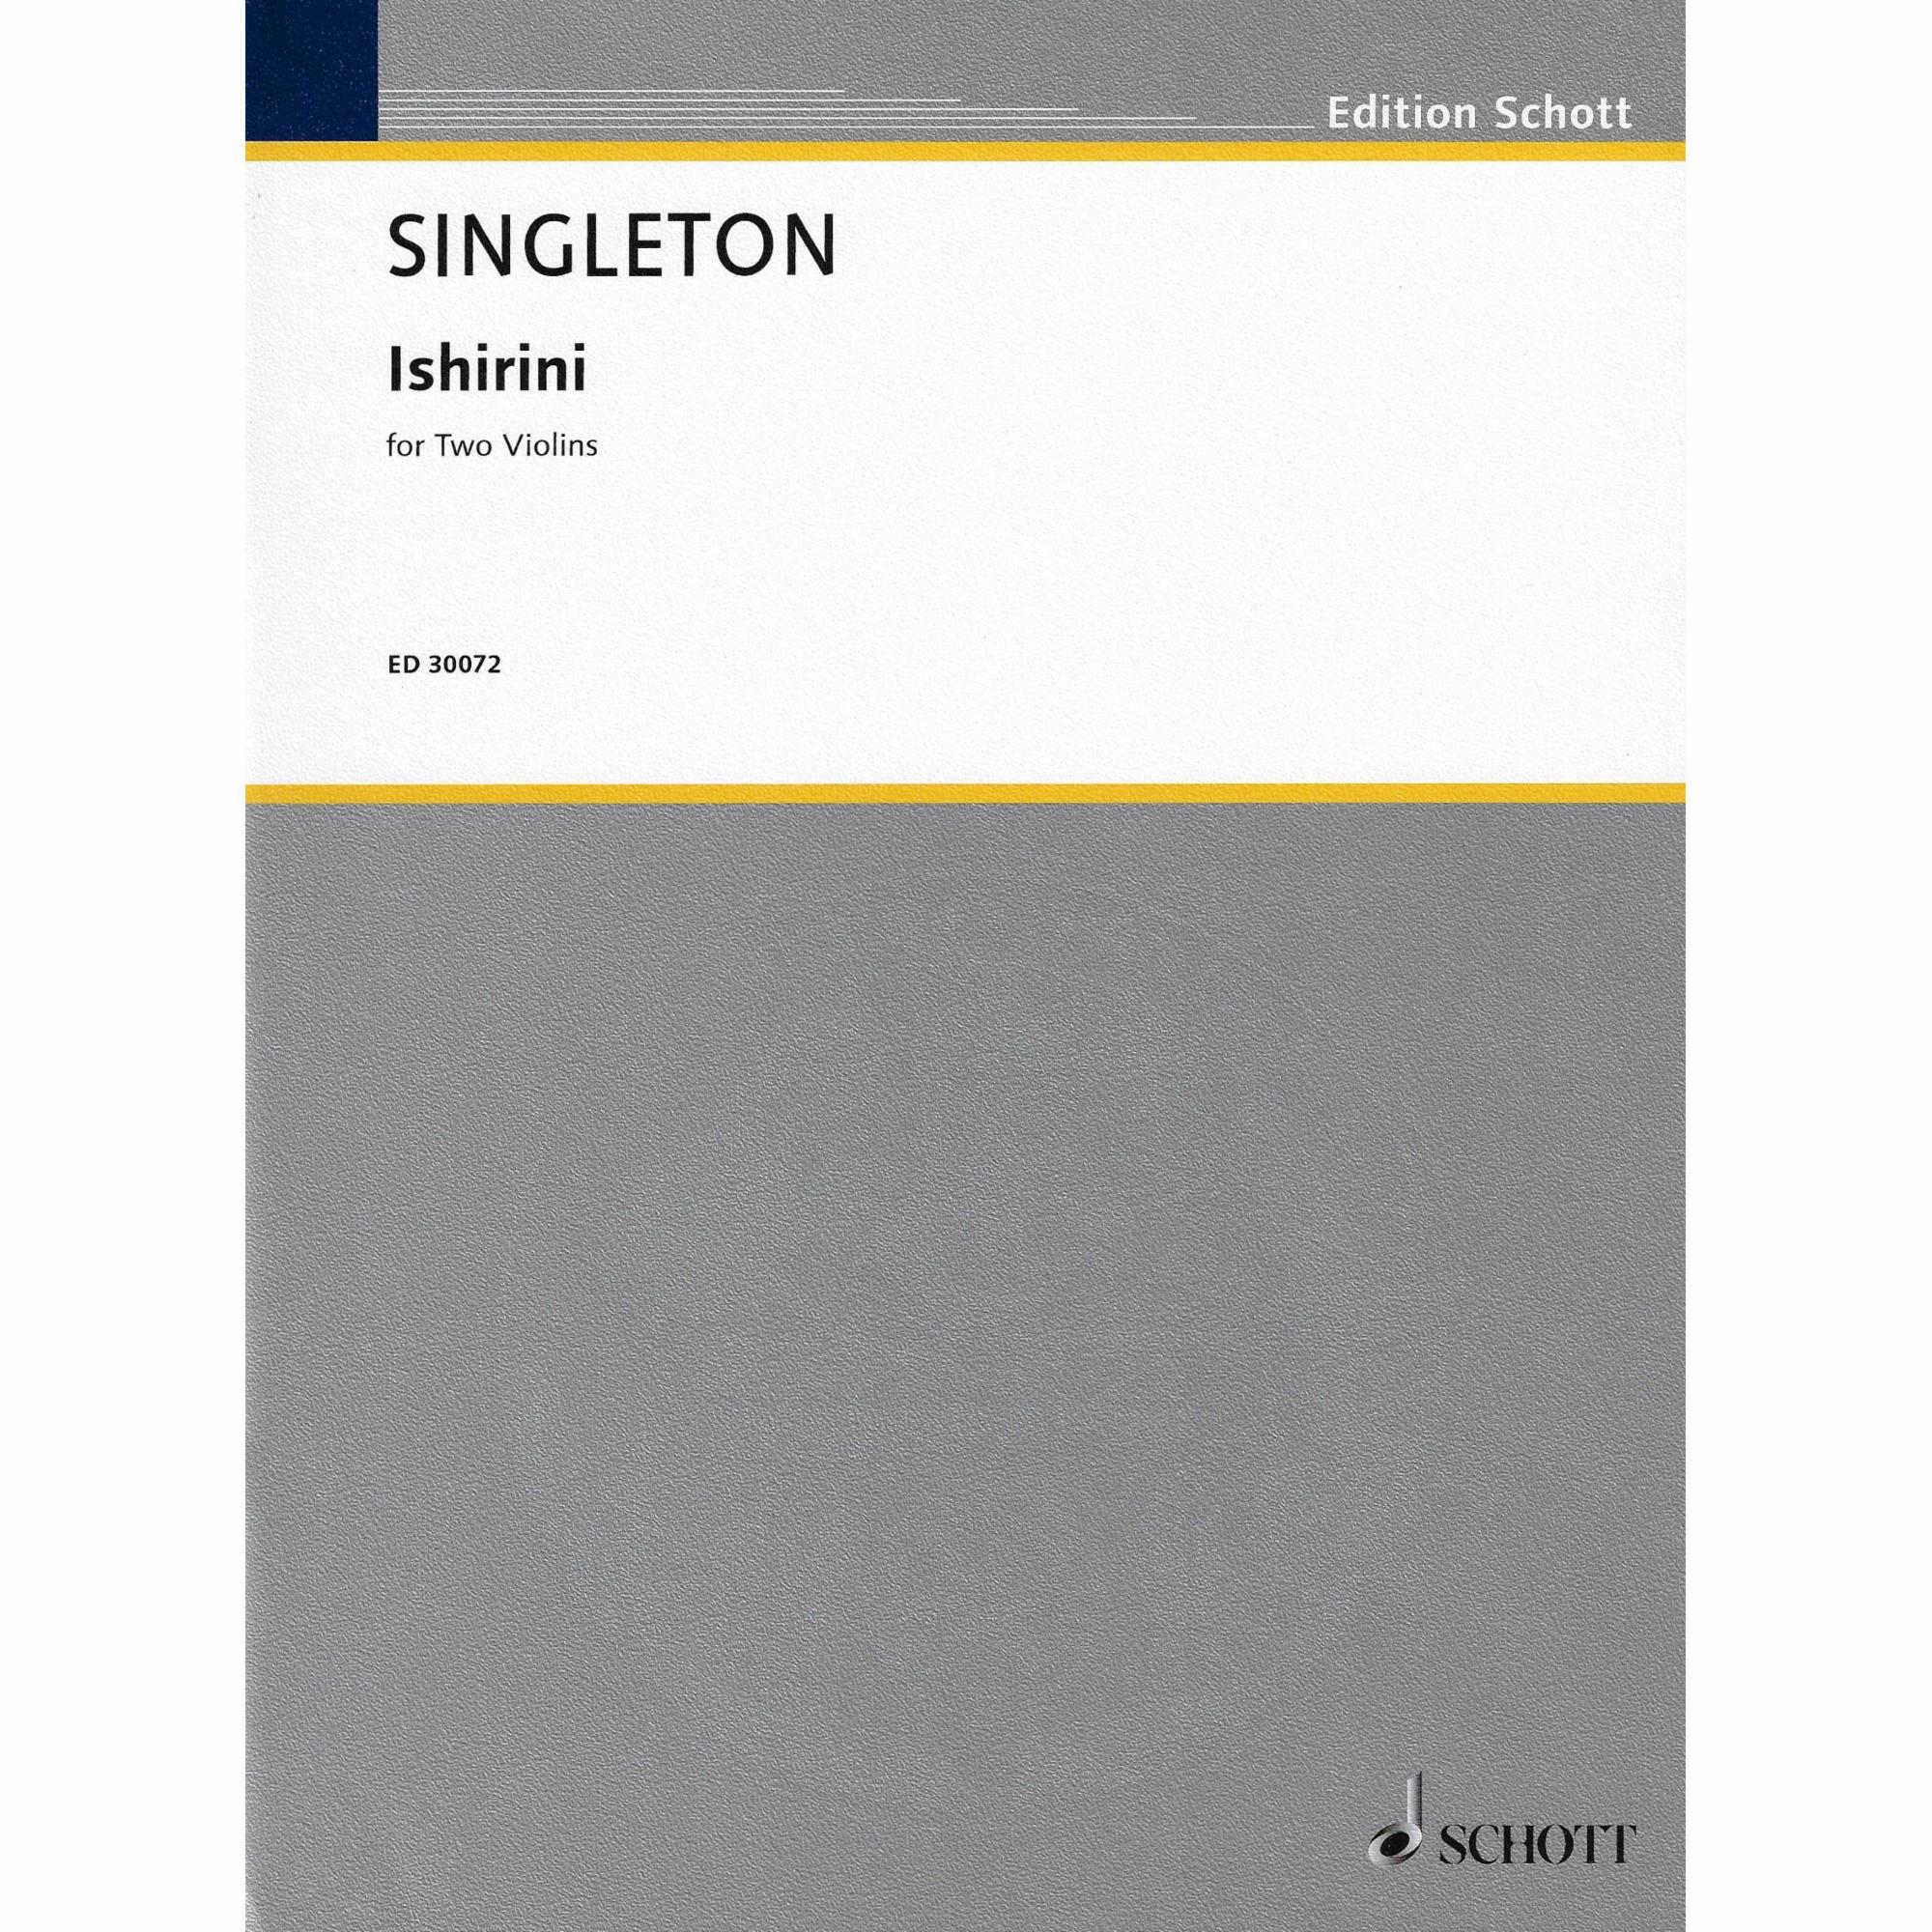 Singleton -- Ishirini for Two Violins